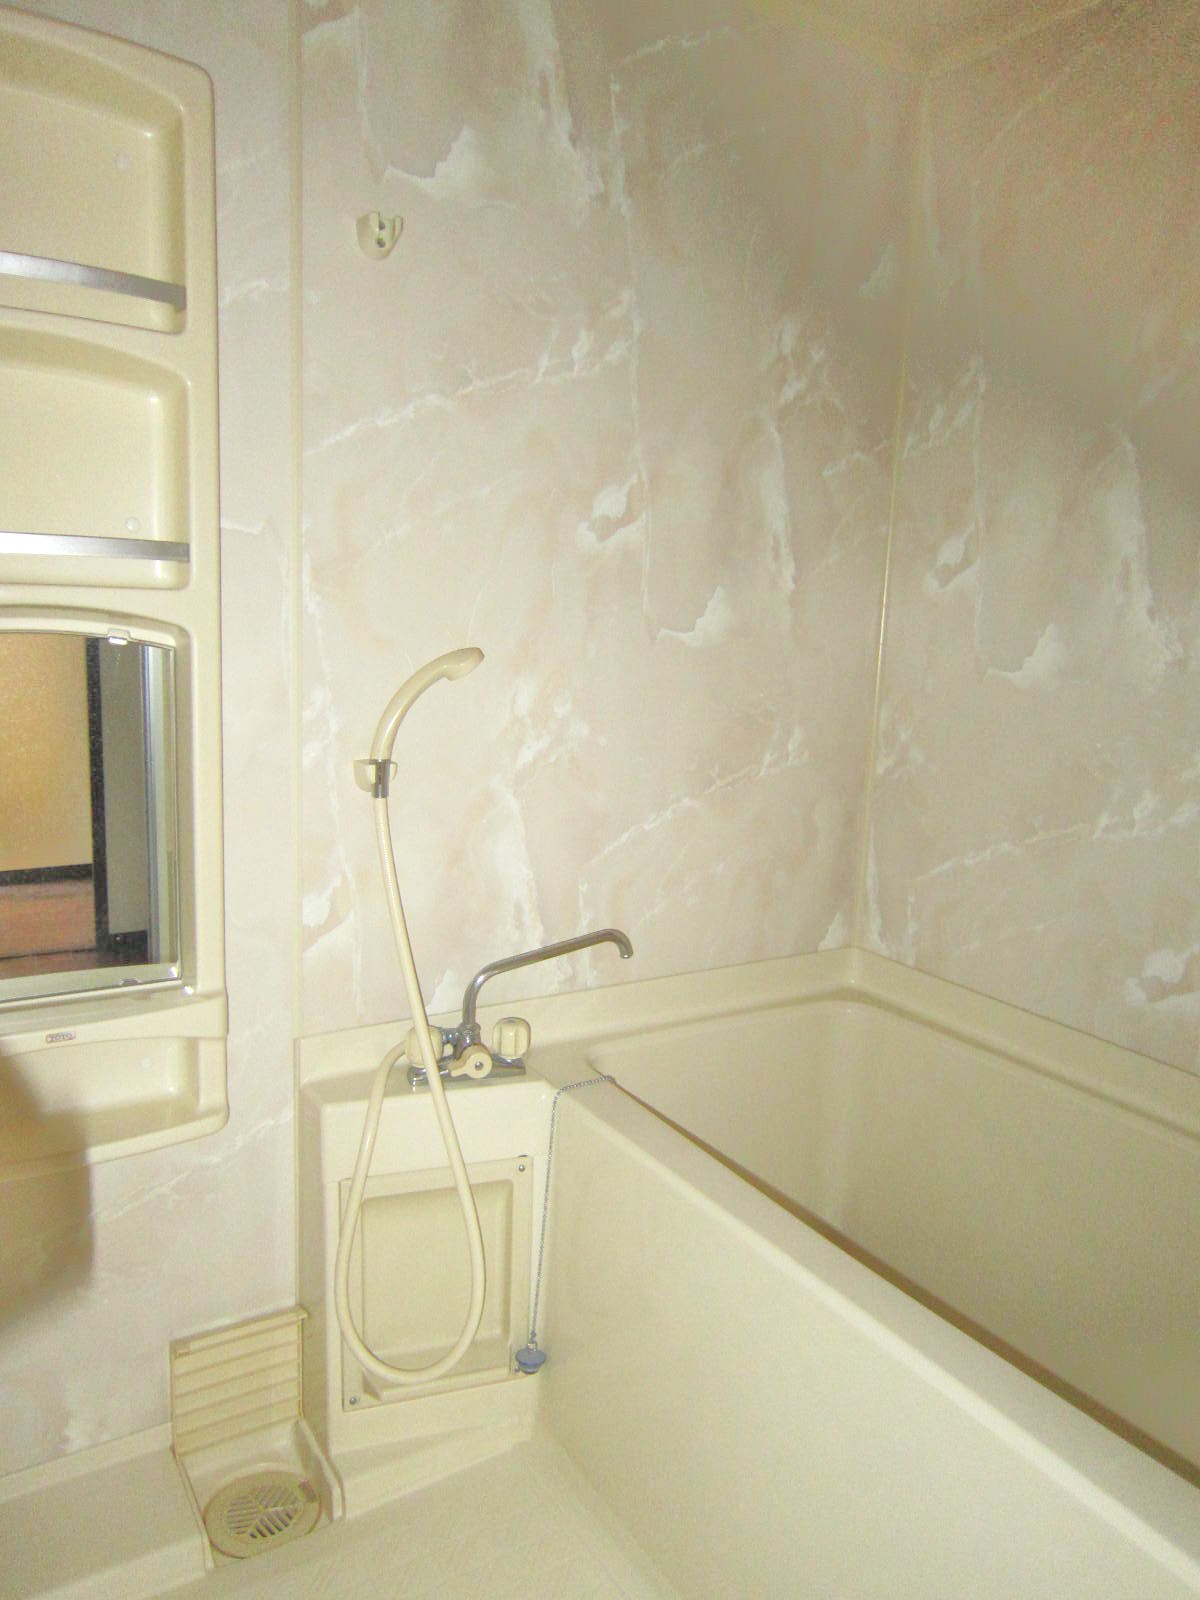 Bath. With shampoo dresser